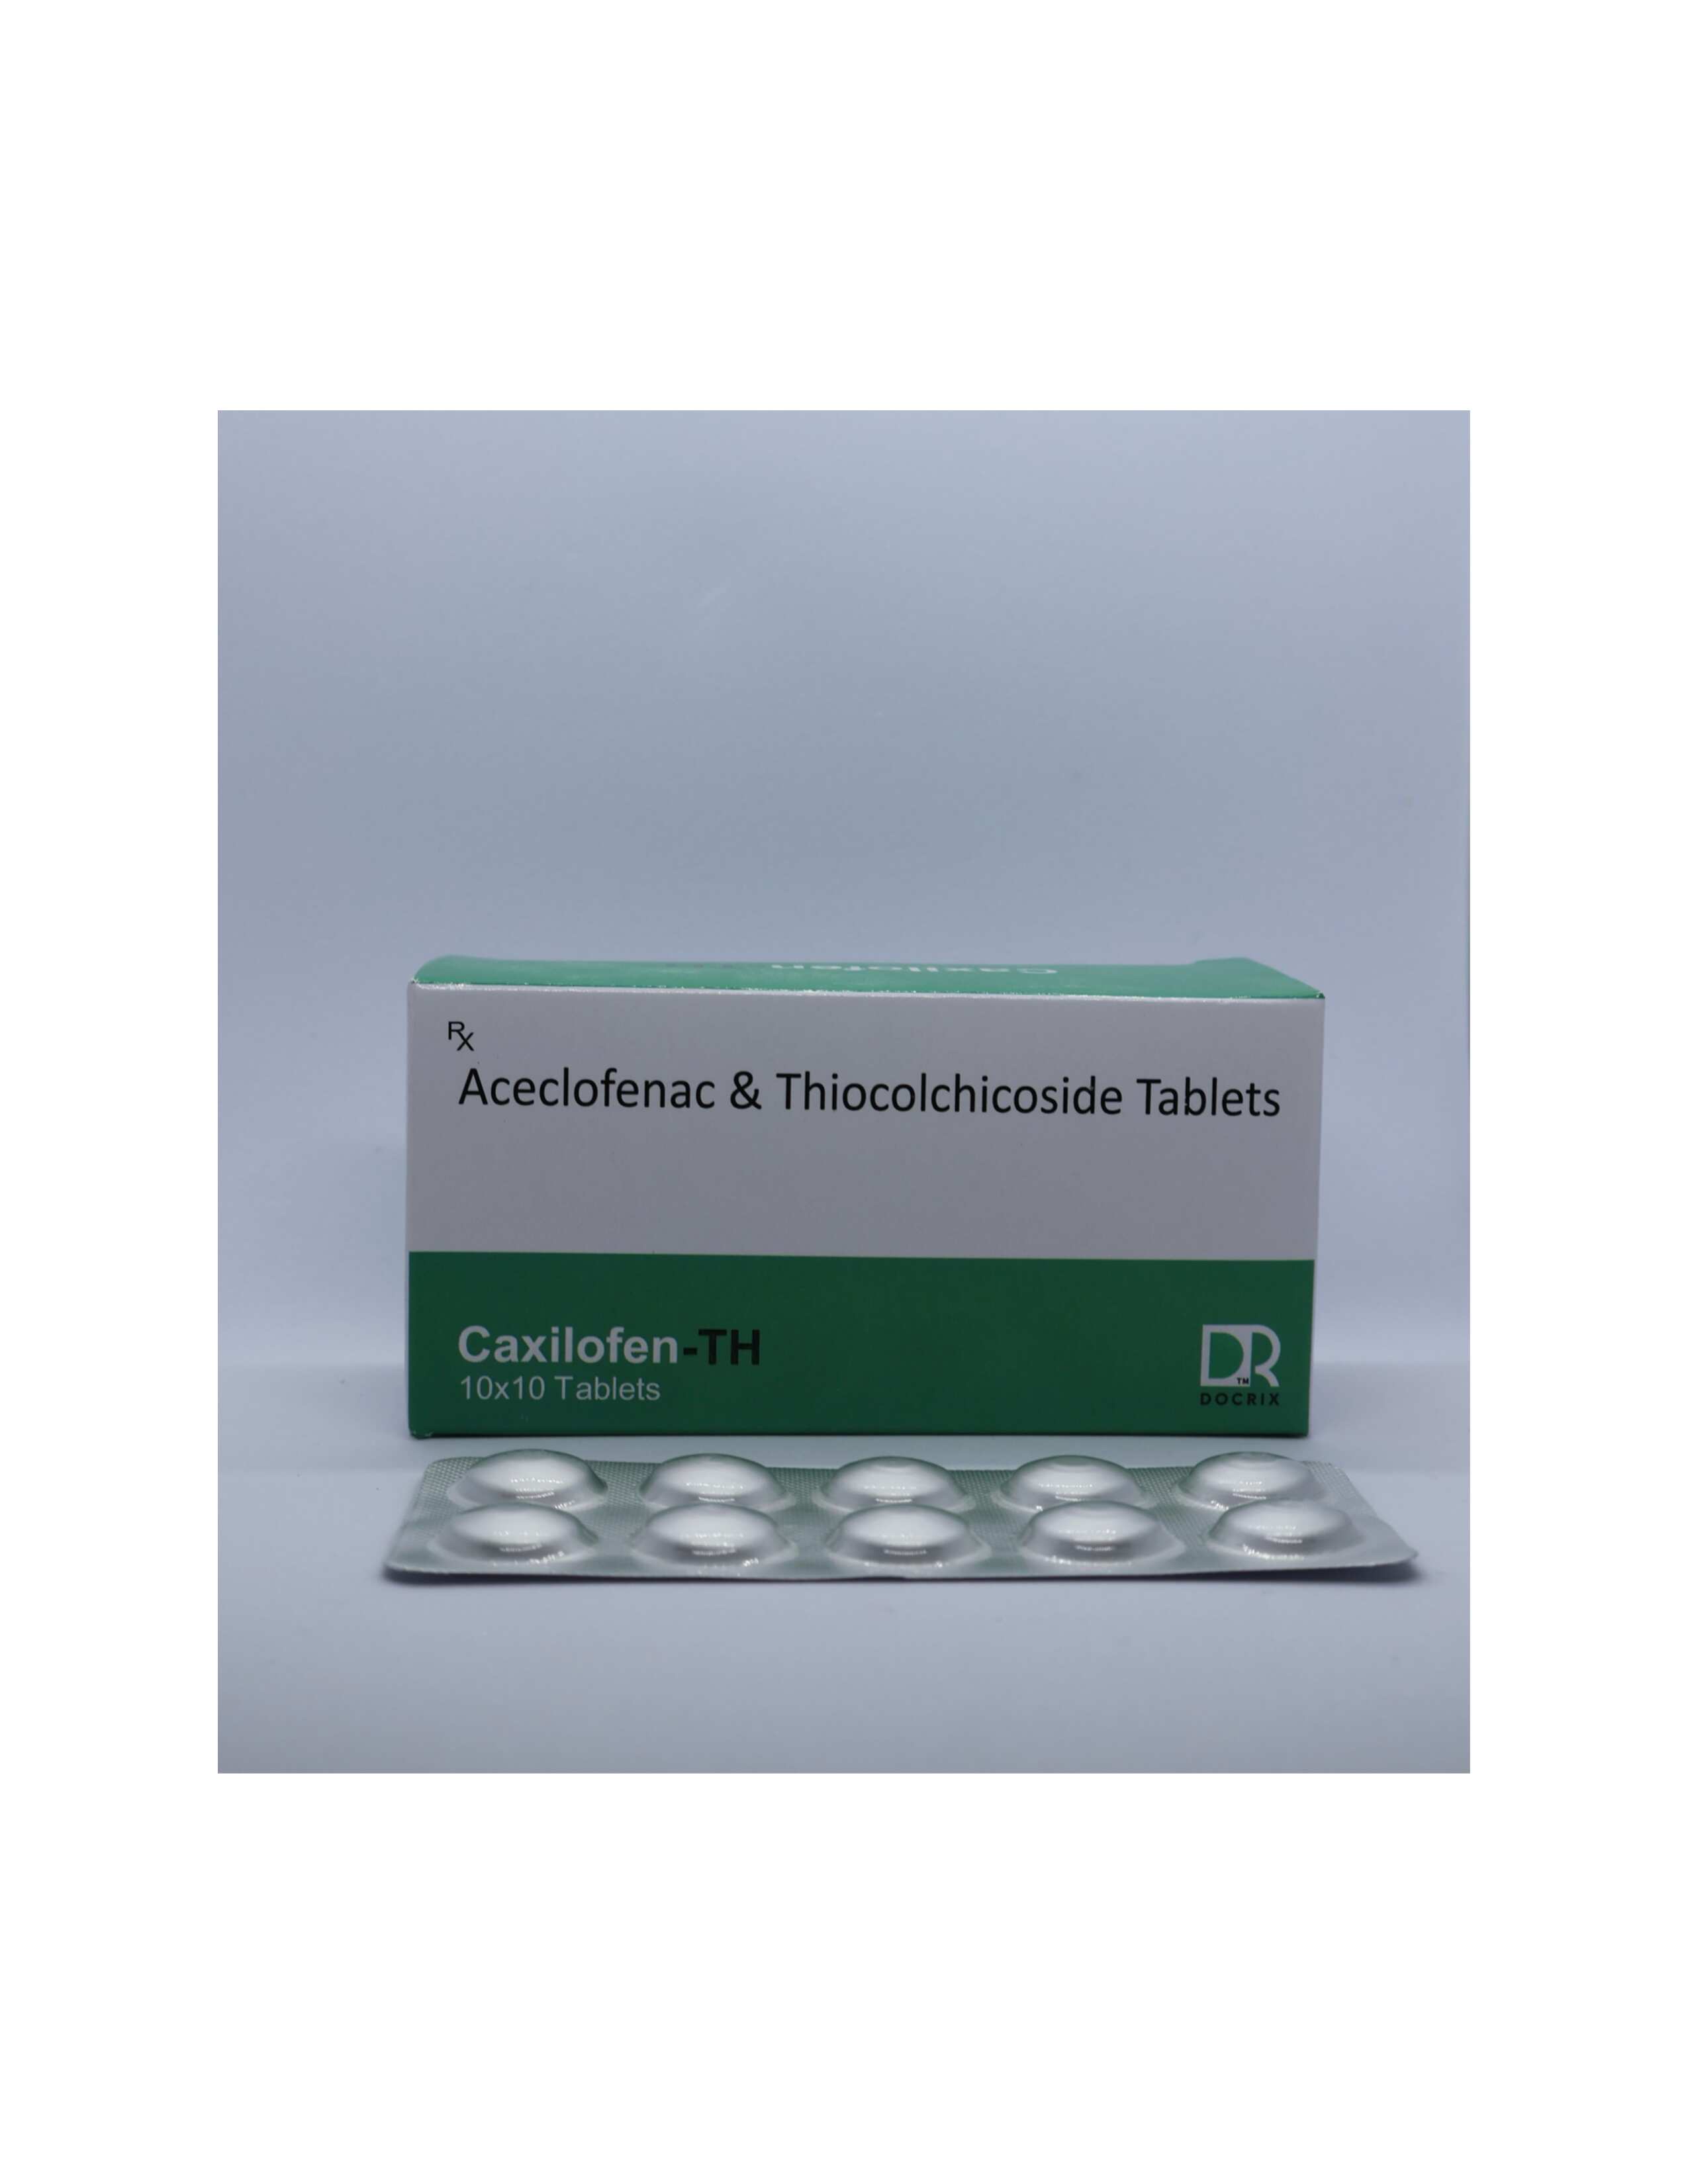 Product Name: Caxilofen TH, Compositions of Caxilofen TH are Aceclofenac & Thiocolchicoside Tablets - Docrix Healthcare